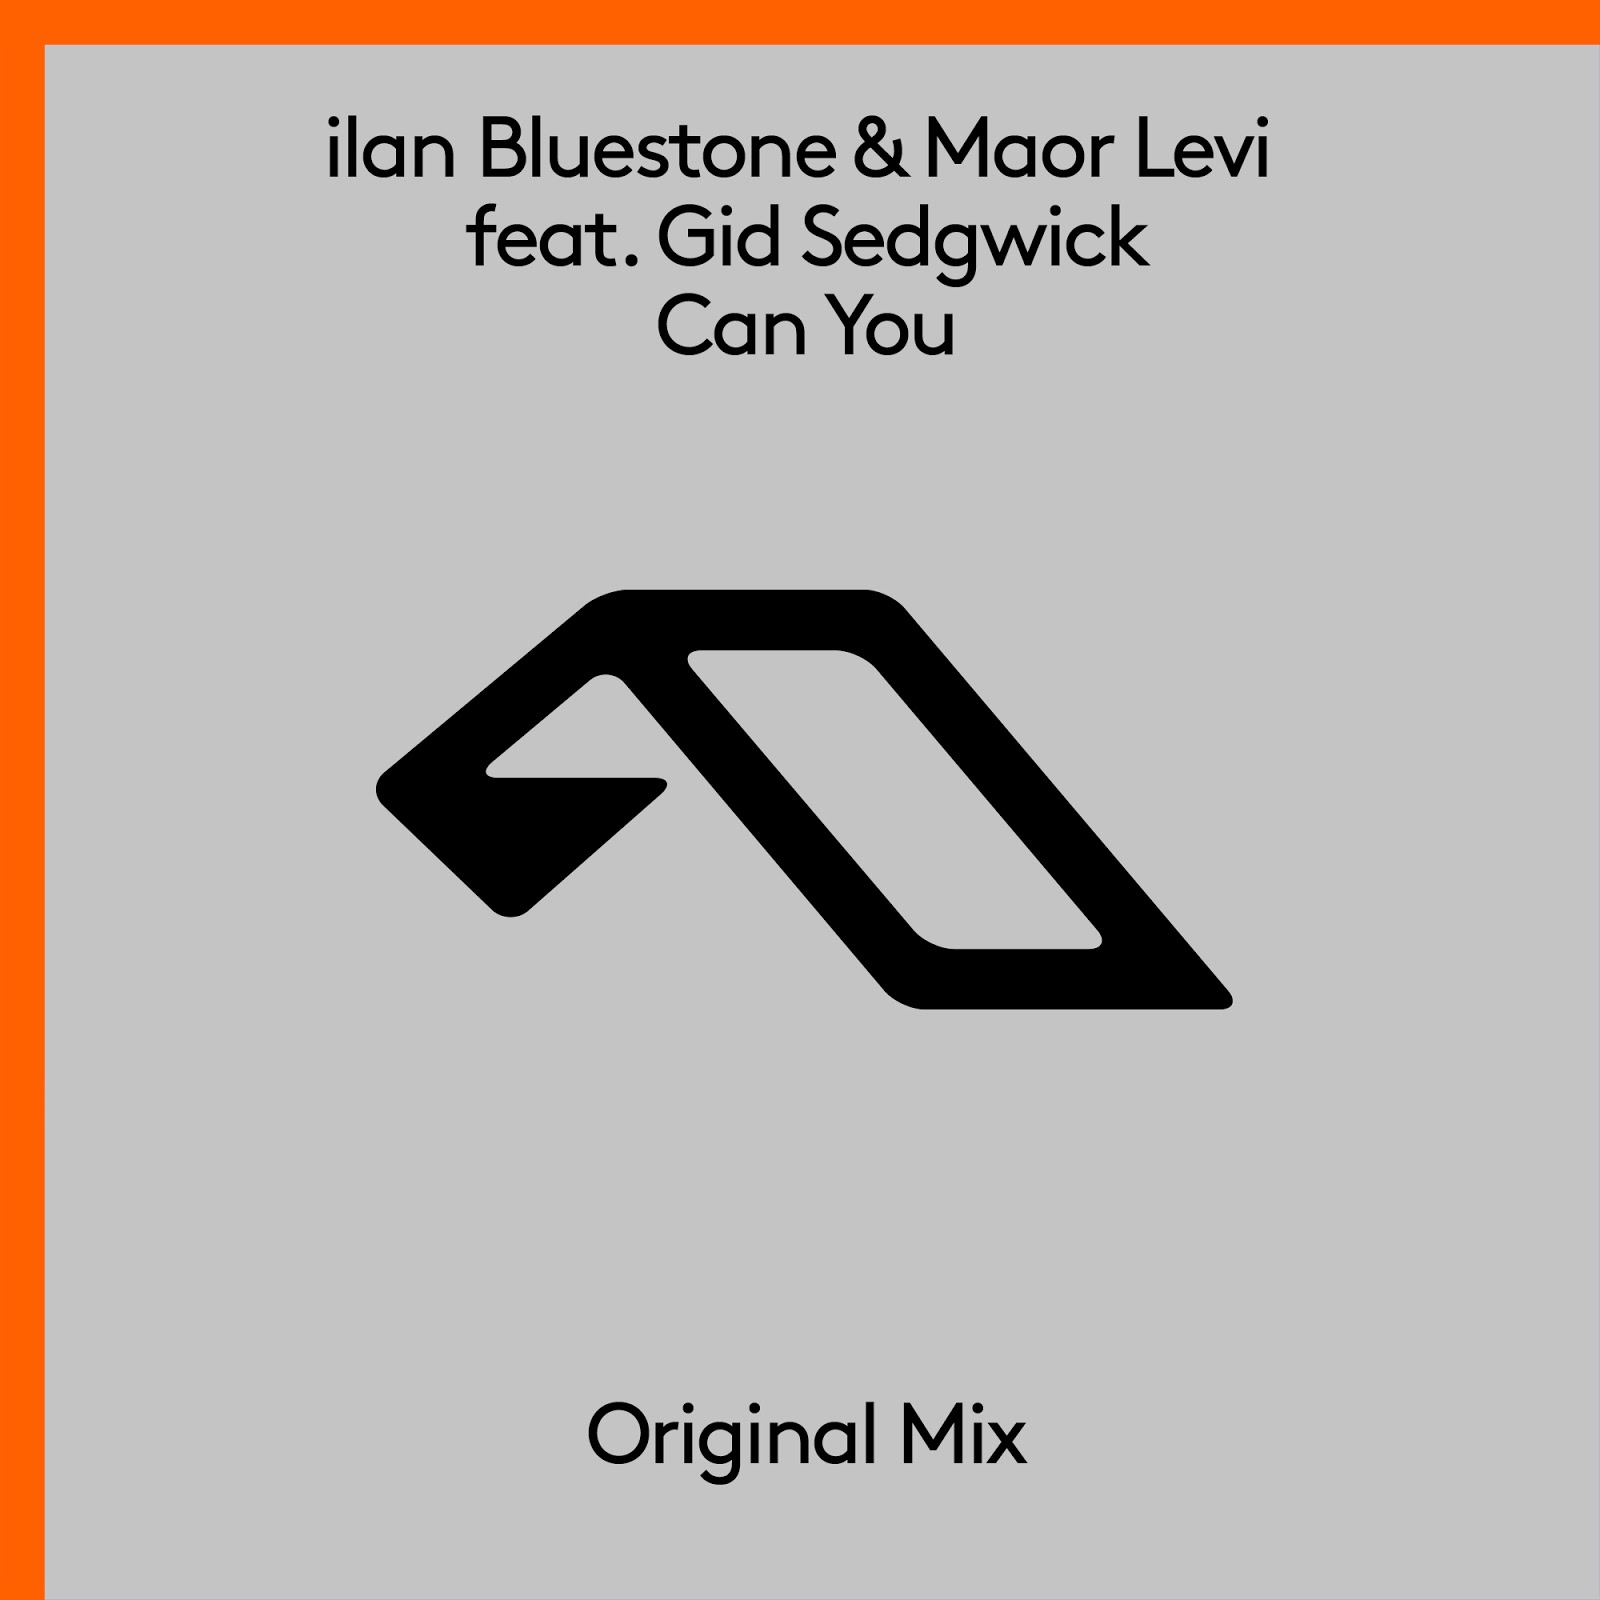 ilan Bluestone and Maor Levi feat. Gid Sedgwick presents Can You on Anjunabeats